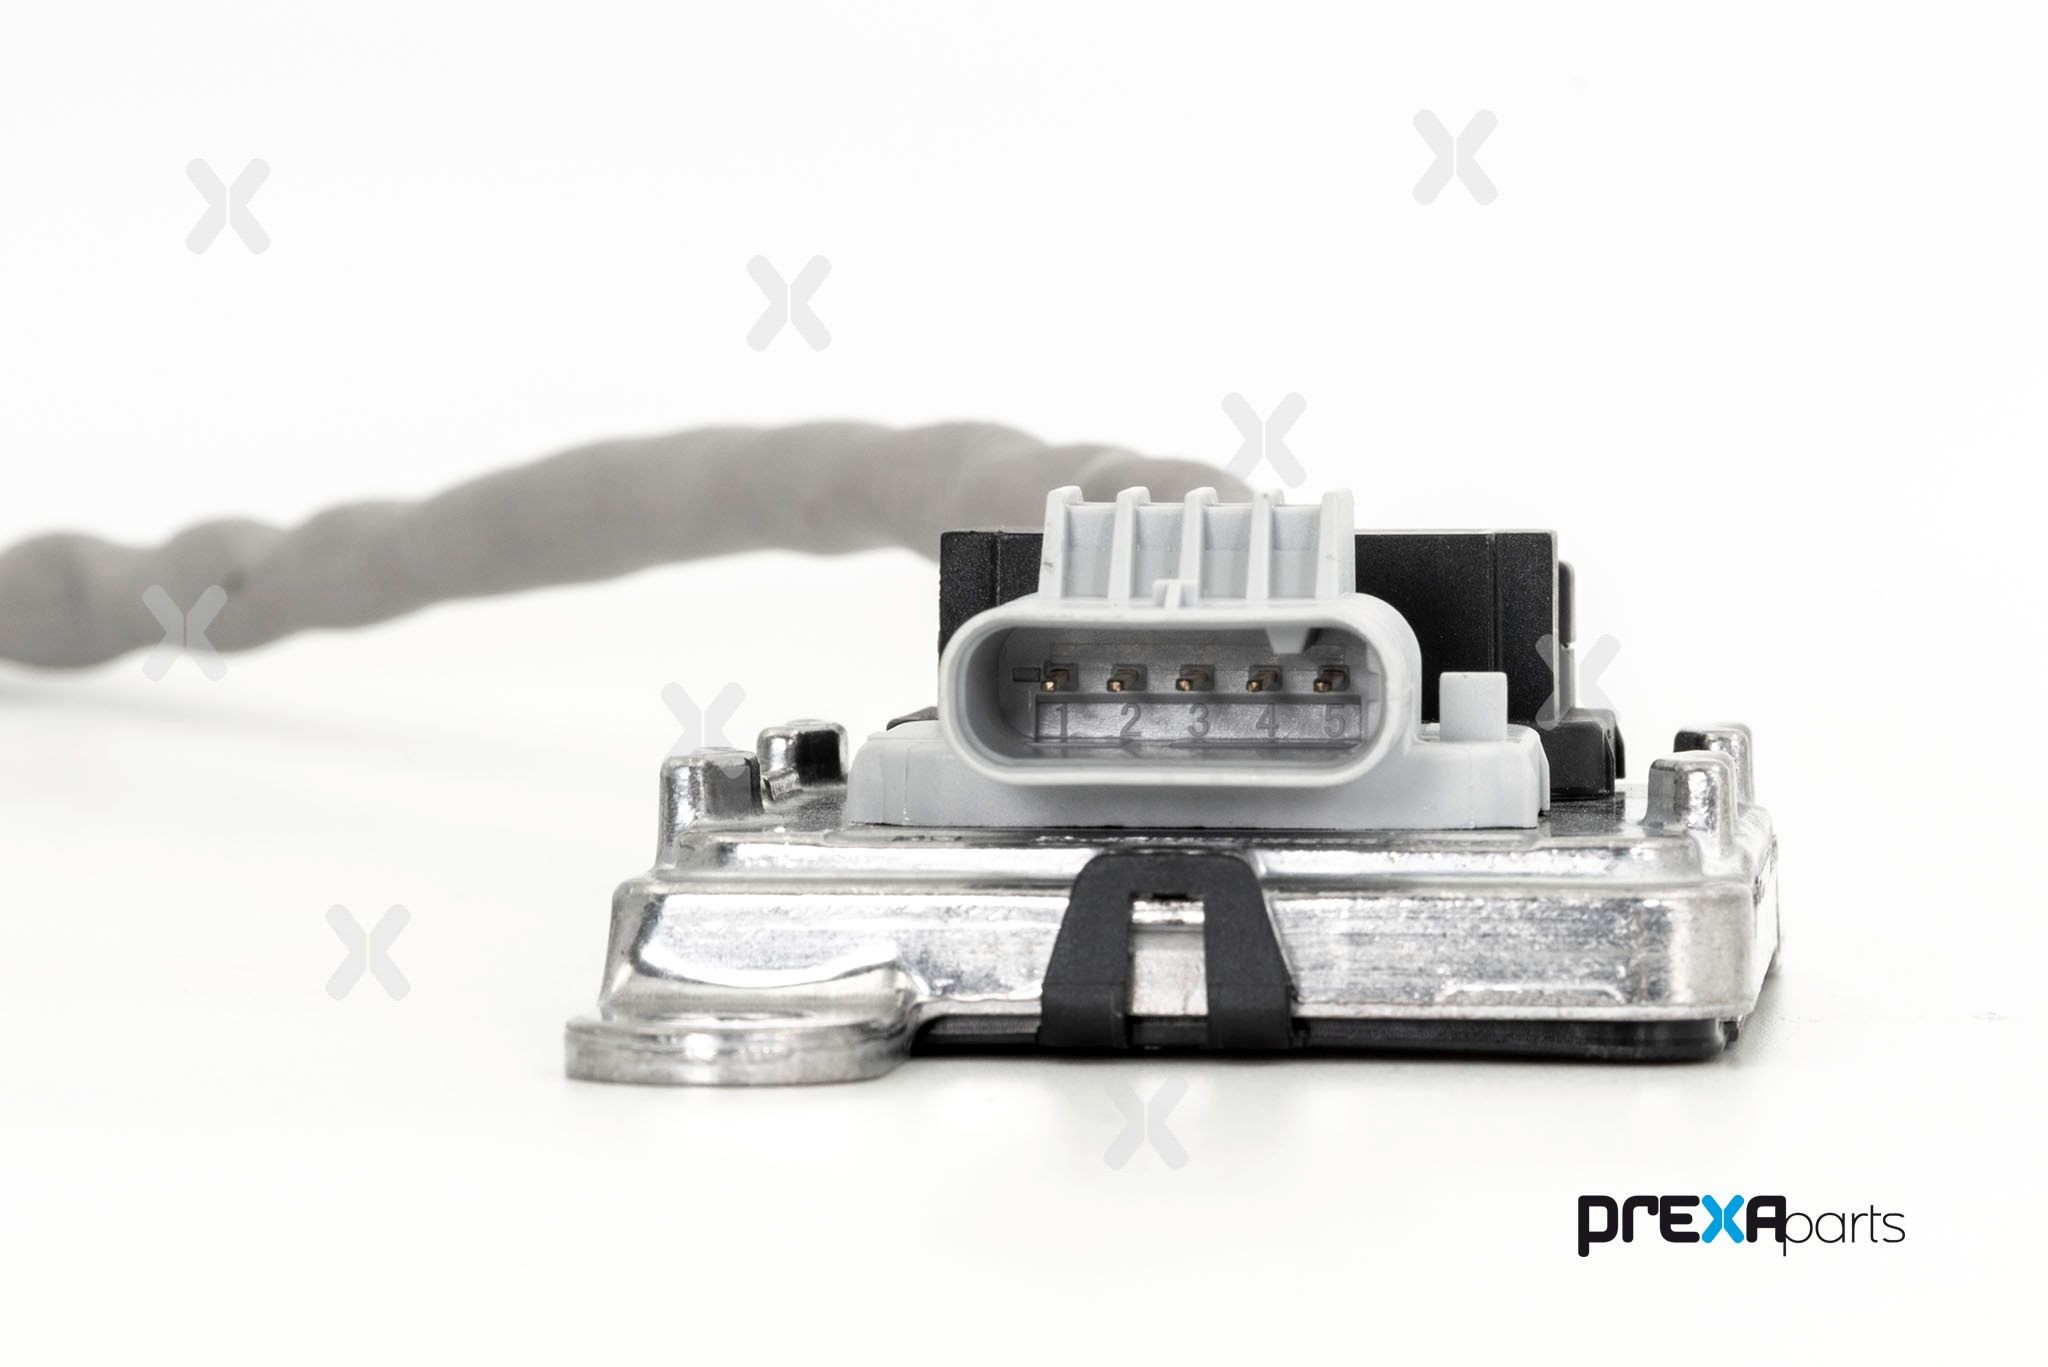 PREXAparts P704010 NOx Sensor, urea injection